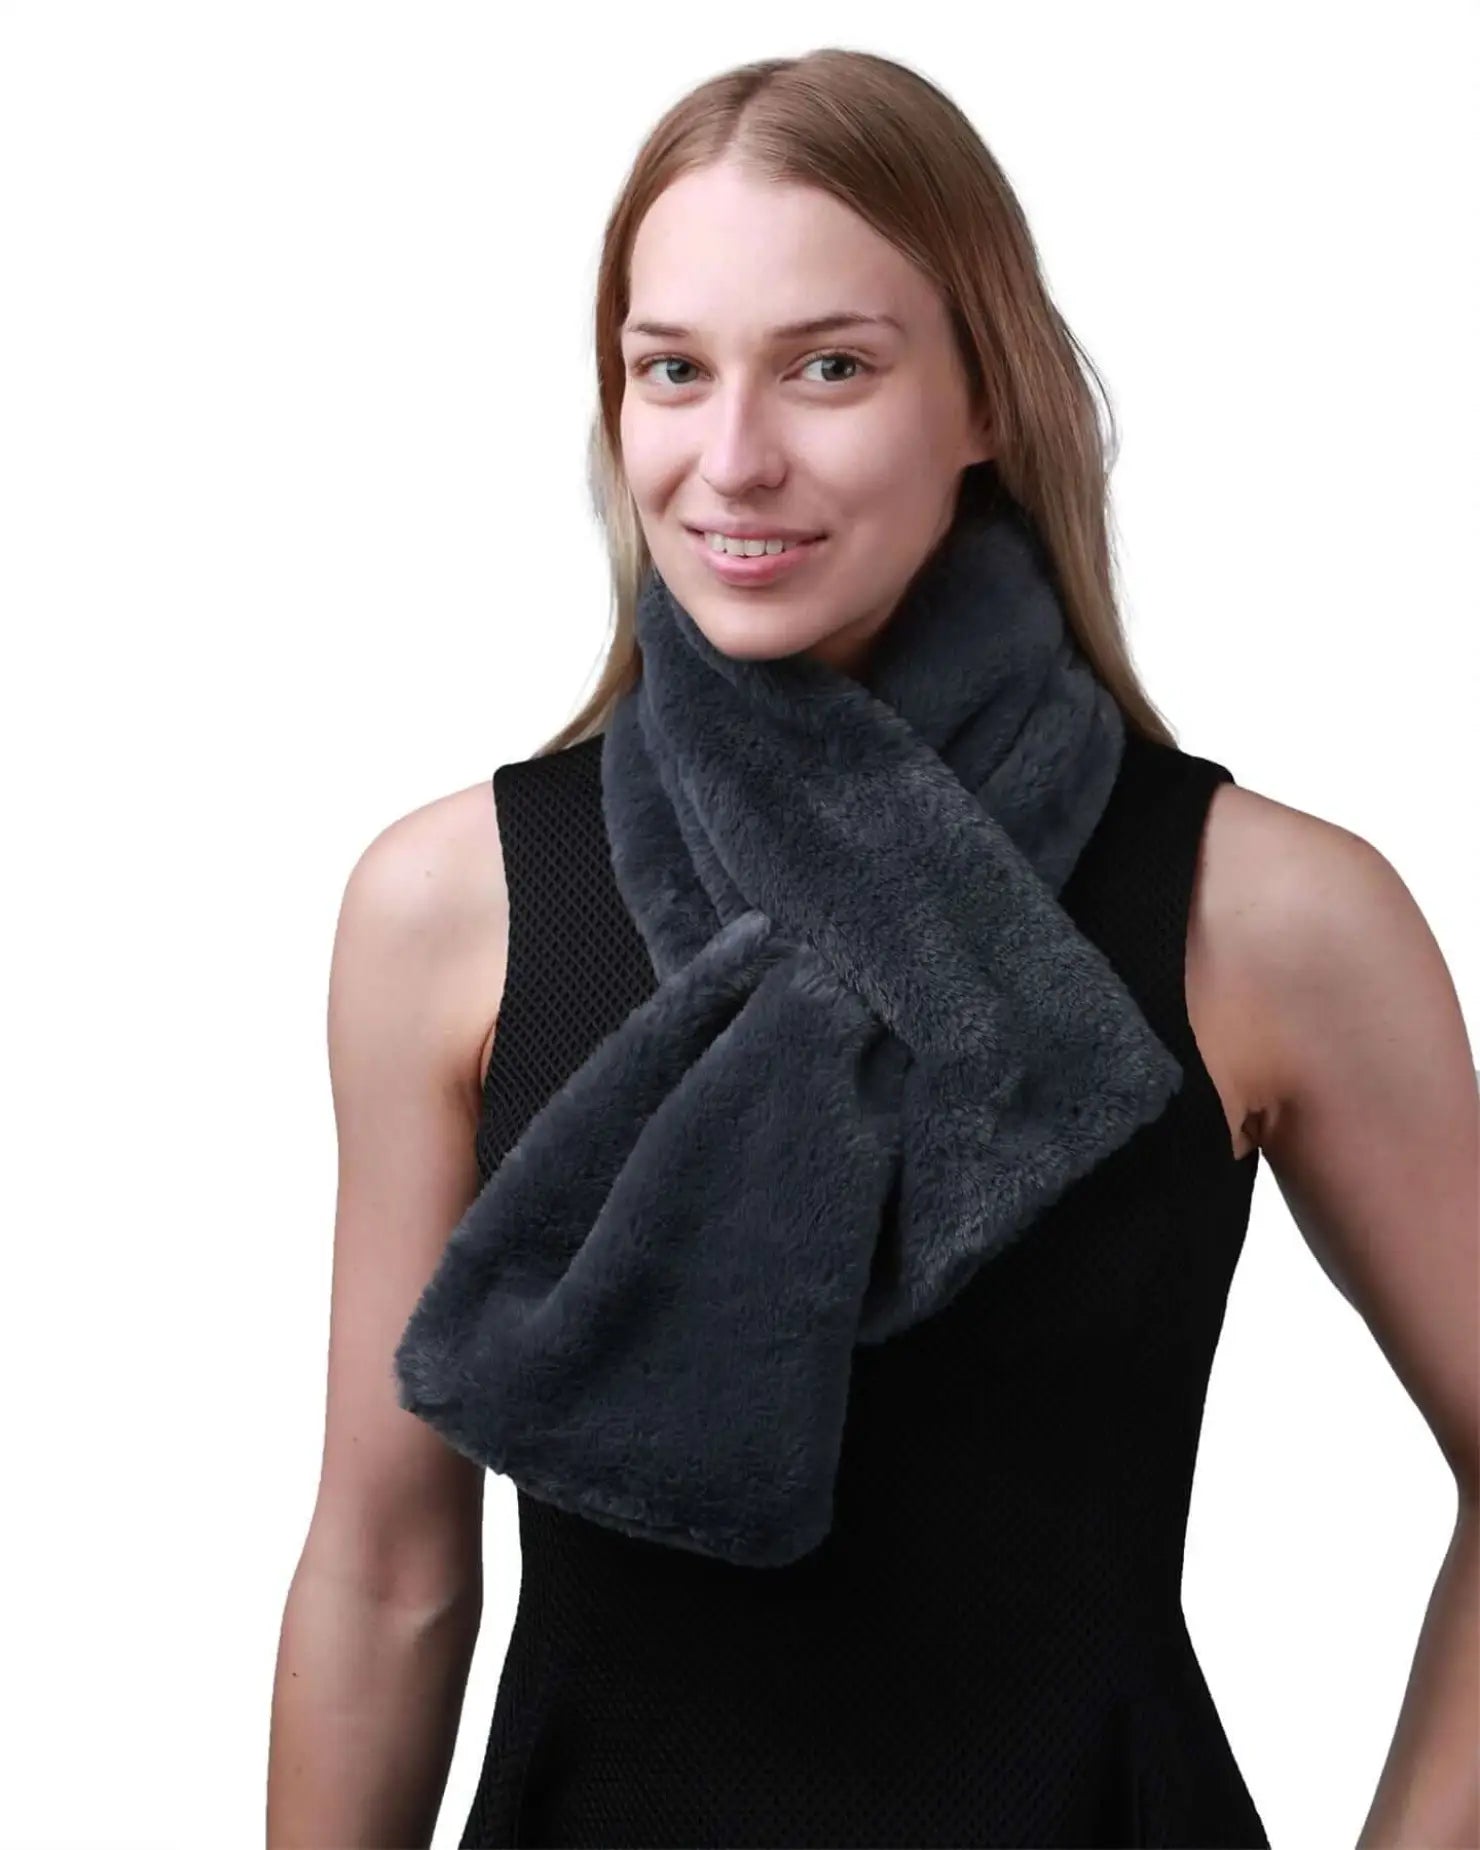 Faux fur collar scarf worn by woman